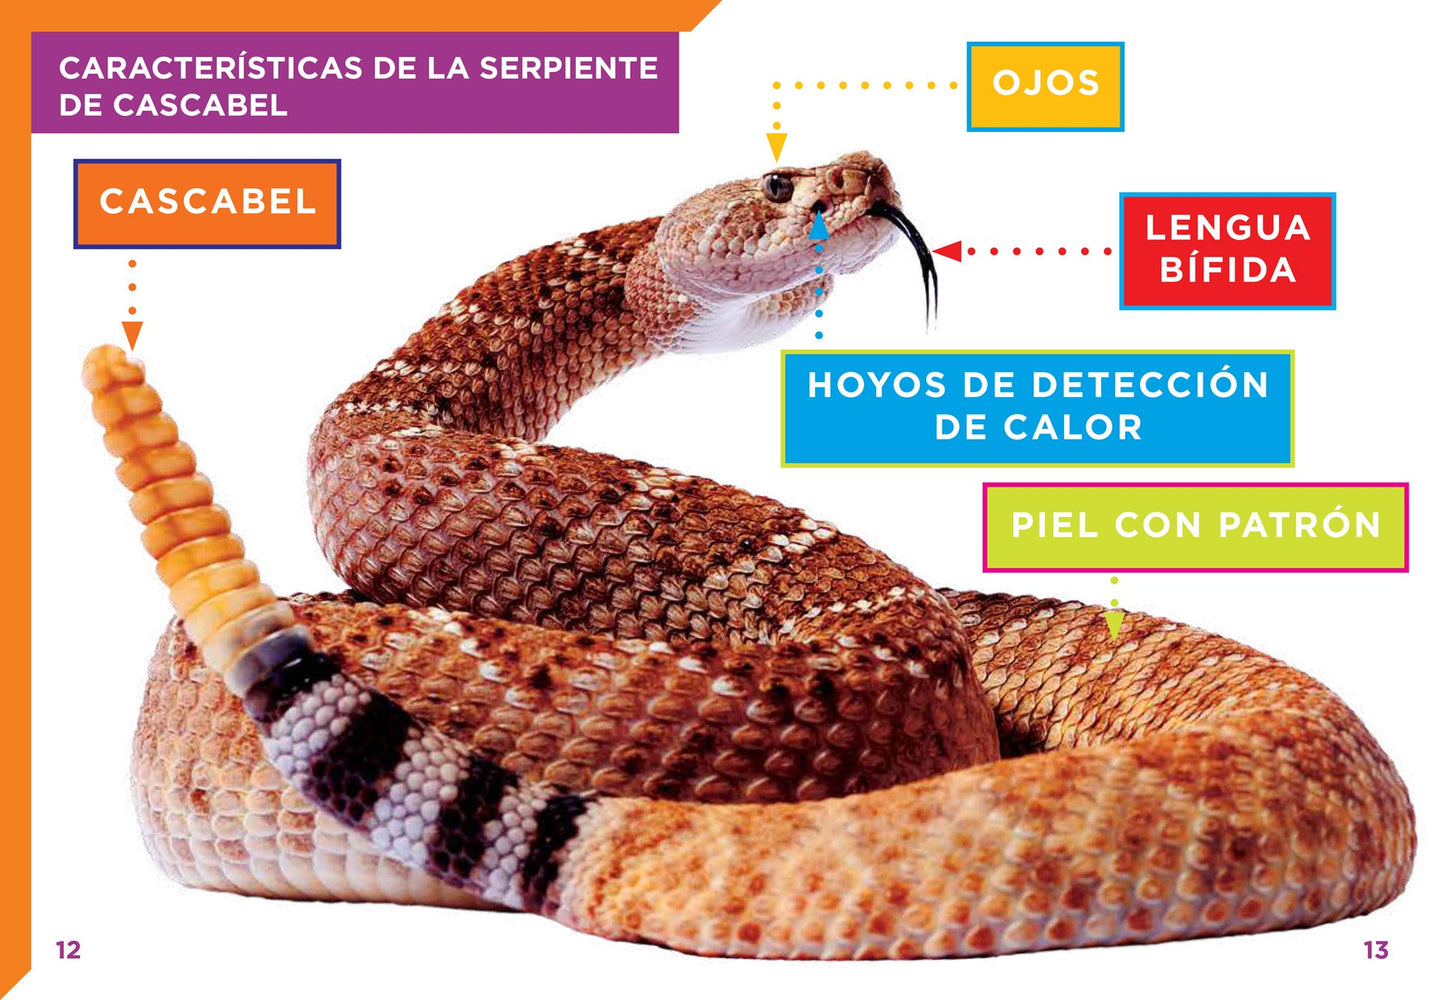 Serpientes escurridizas: Serpientes de cascabel